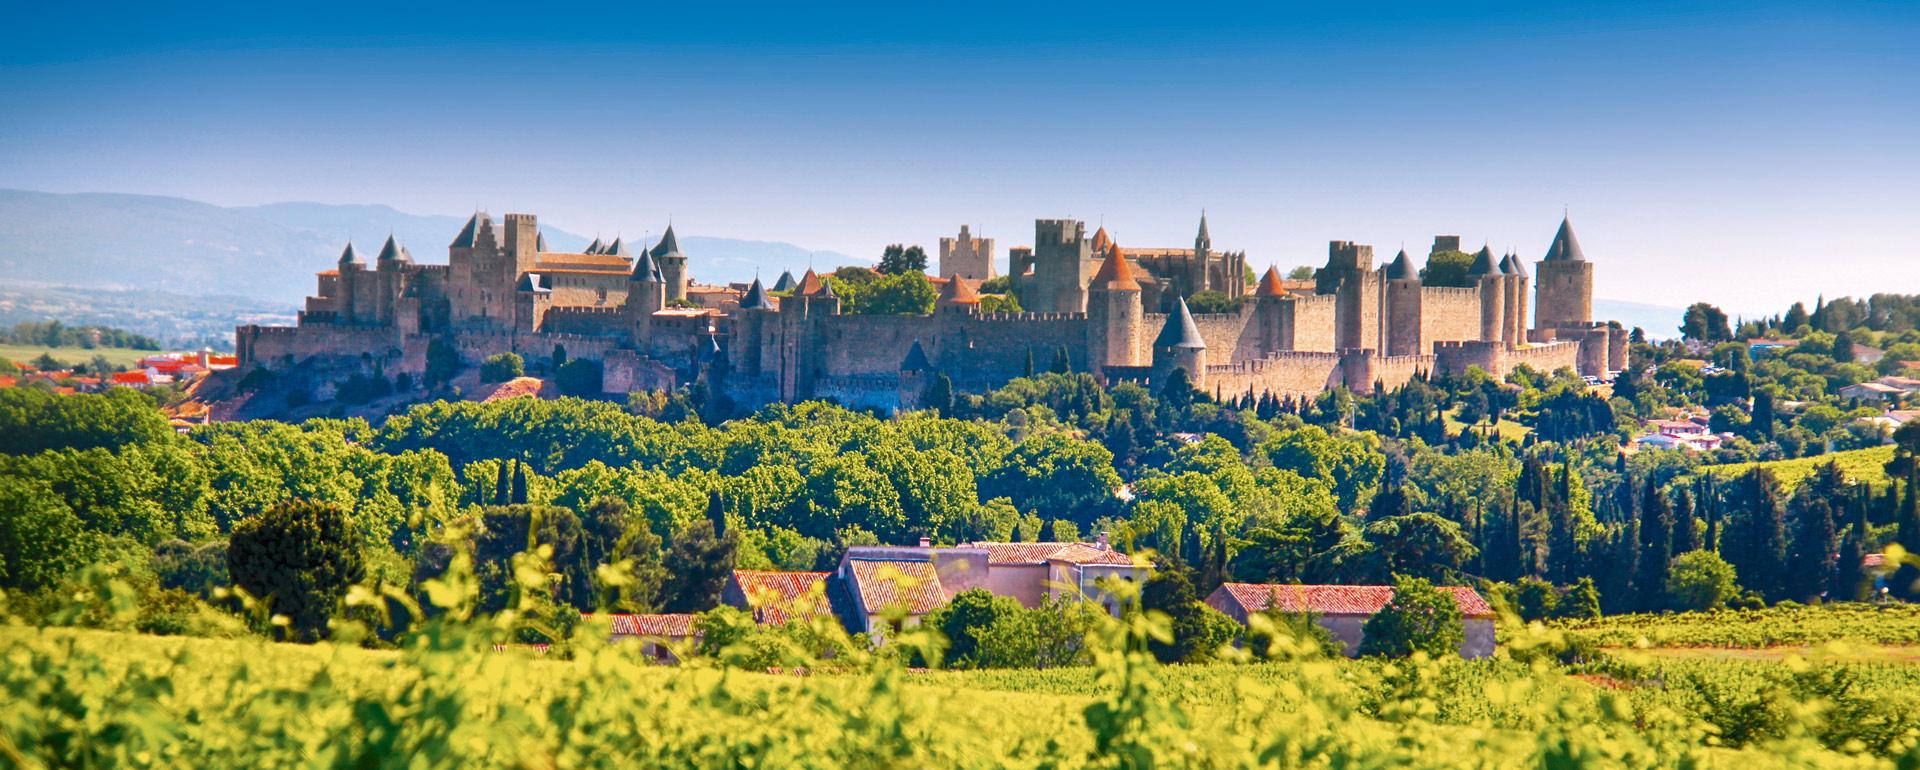 https://www.tourisme-occitanie.com/uploads/2018/9/la-cite-de-carcassonne_g-deschamps.jpg